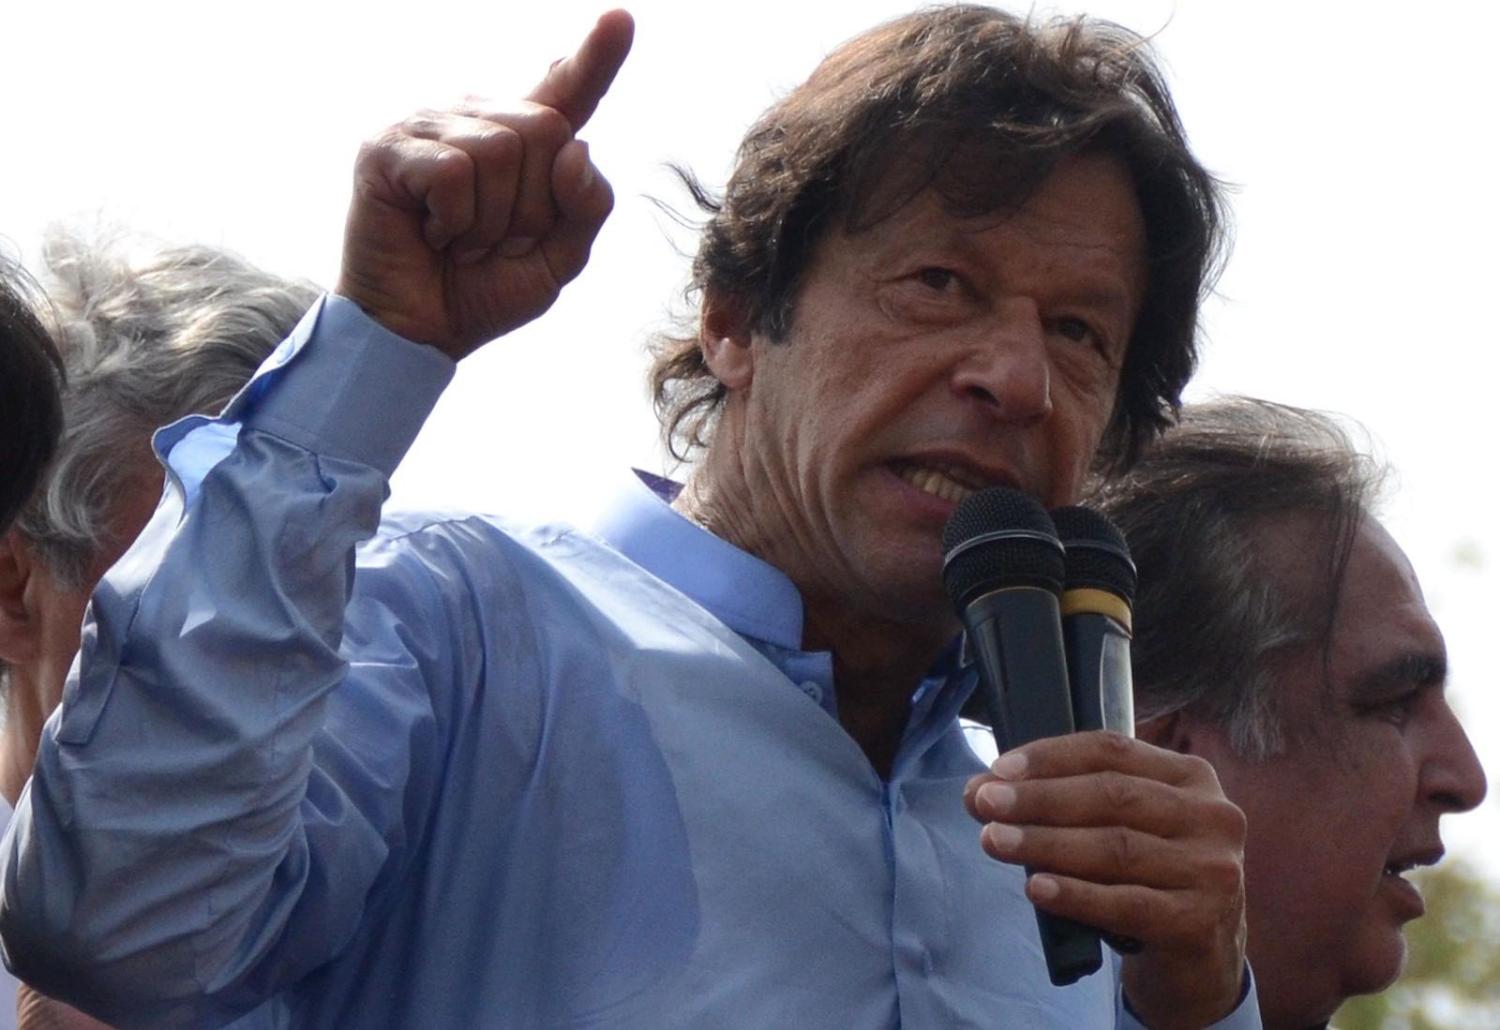 Imran Khan addresses a rally in 2015 in in Karachi, Pakistan (Photo: Qaisar Khan via Getty)